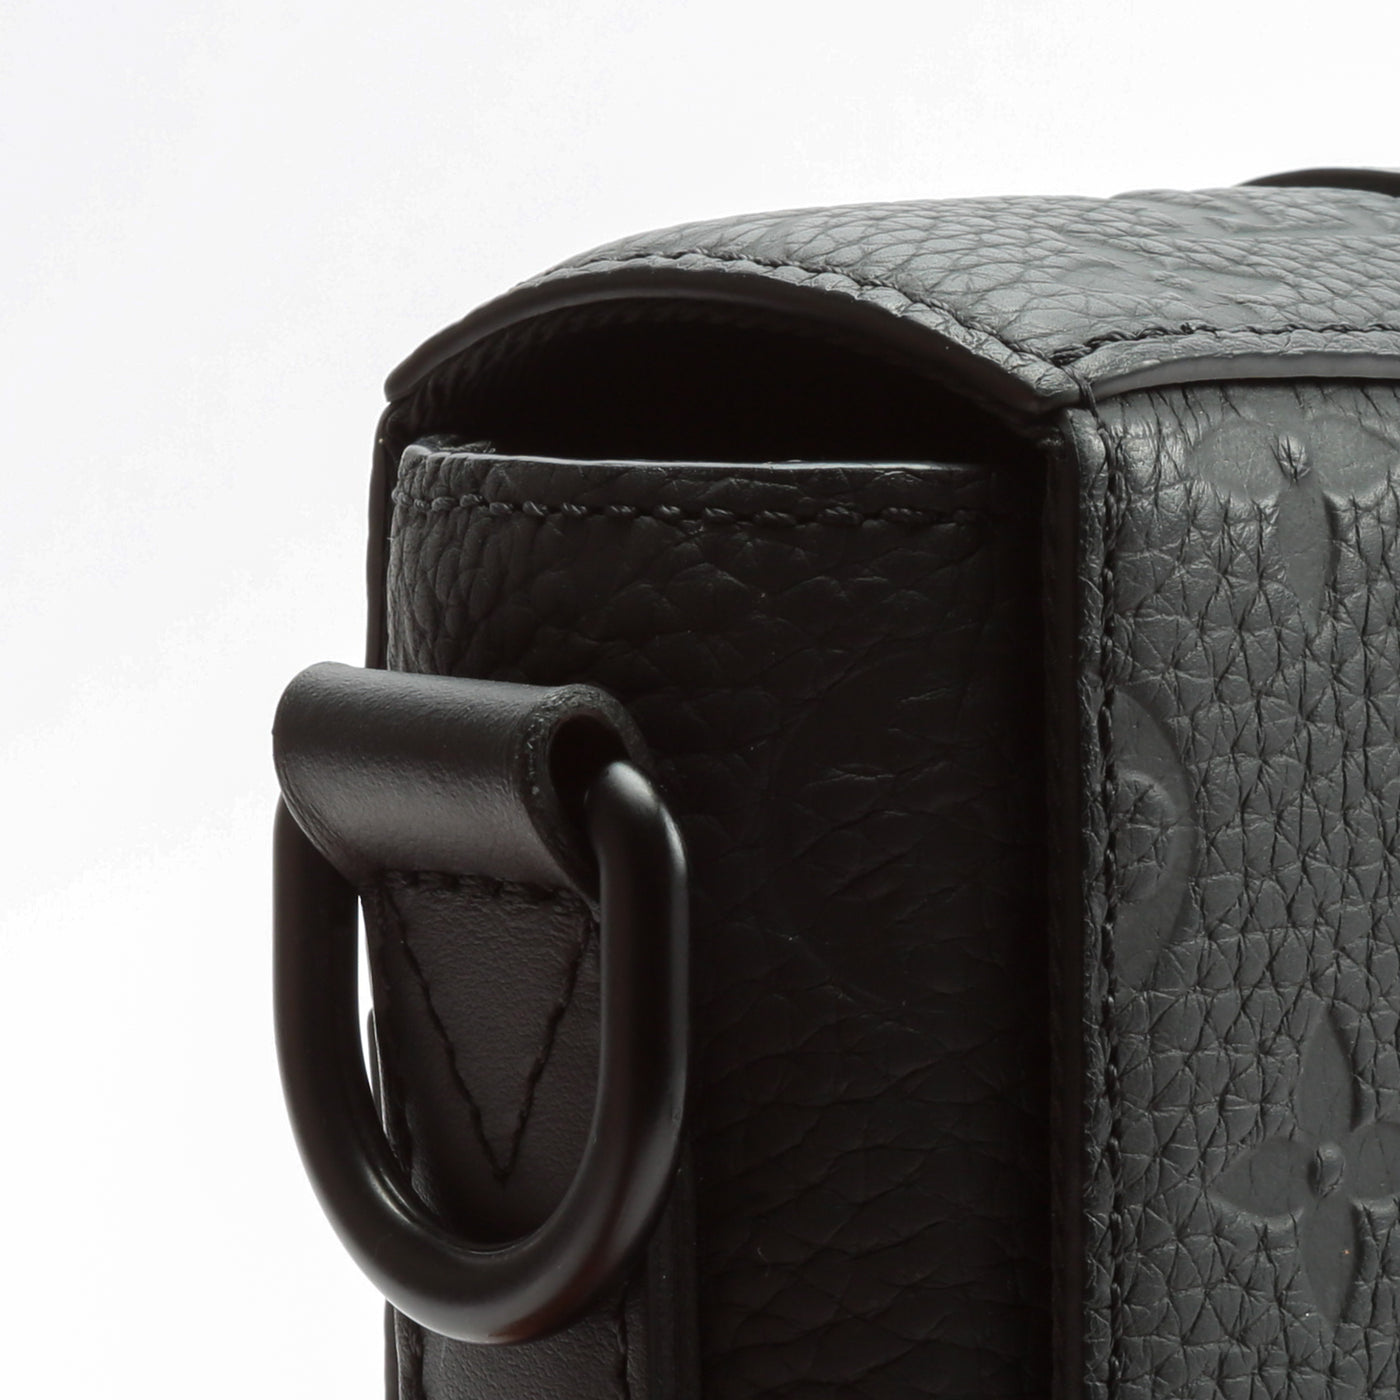 Louis Vuitton Trunk Monogram Taurillon Messenger Bag Black